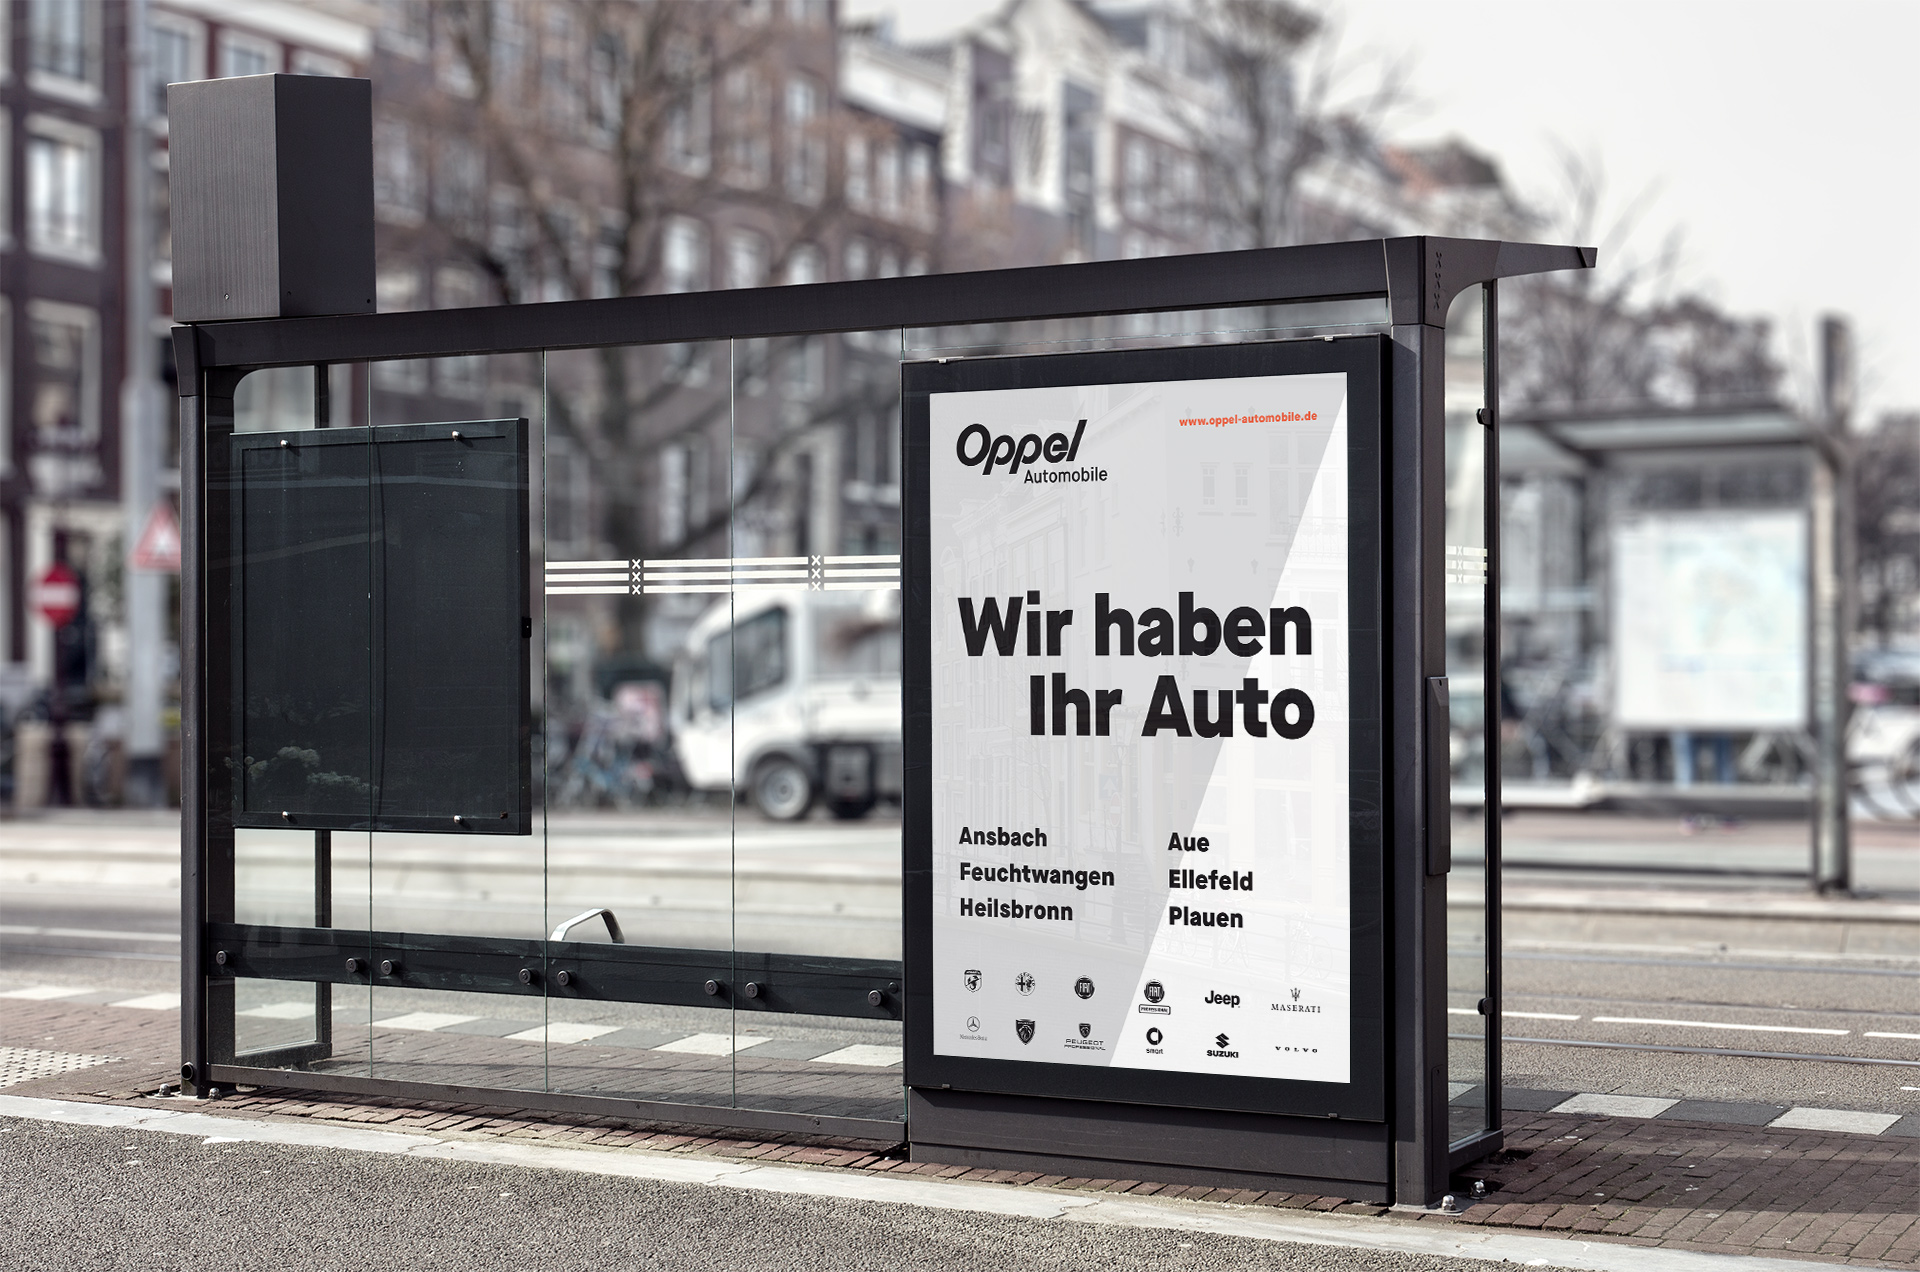 Oppel Automobile – Corporate Design Autohaus, Plakat